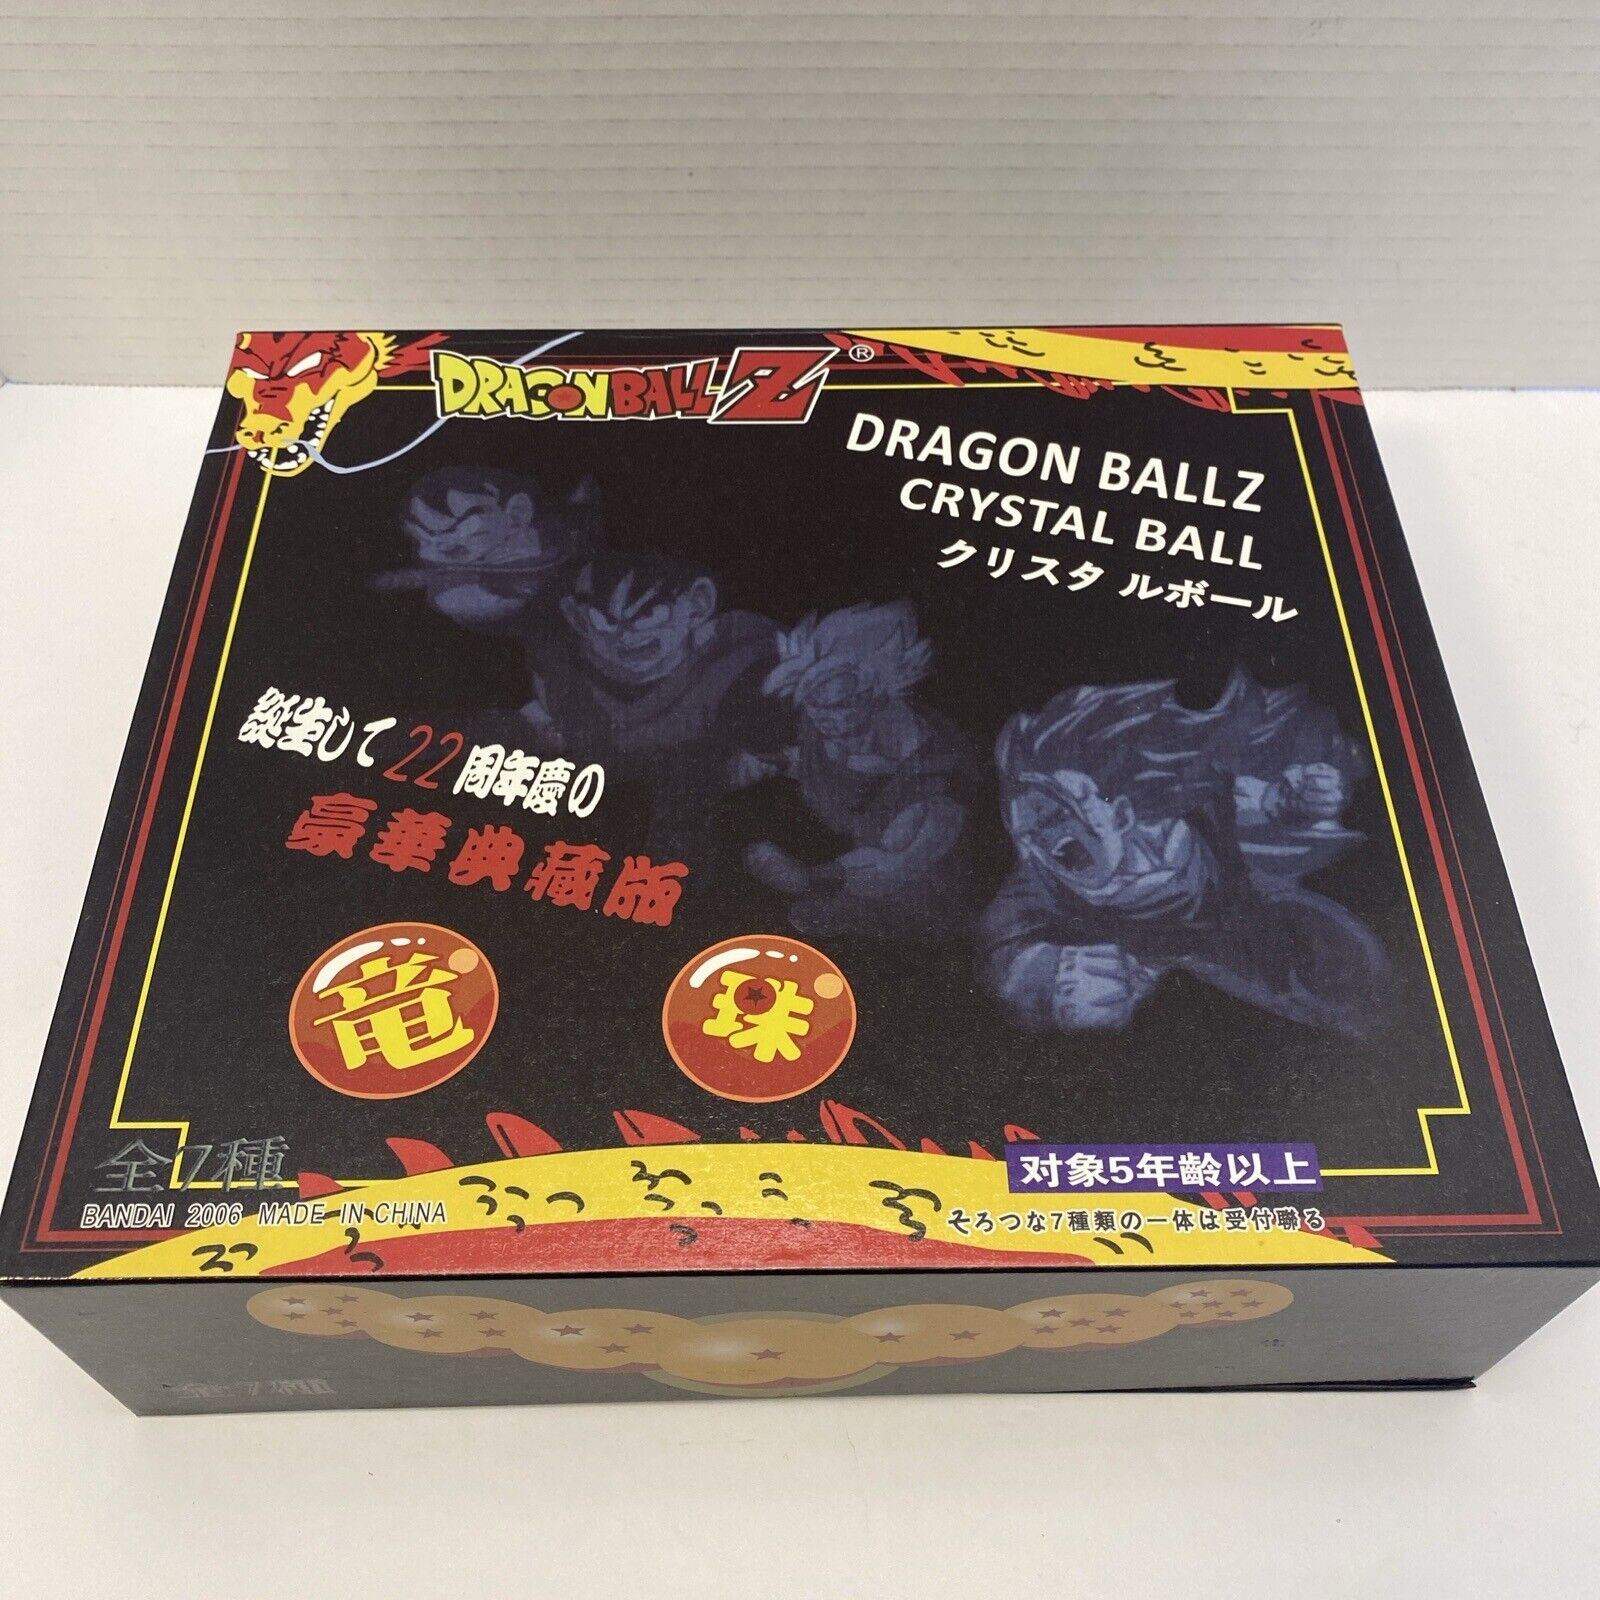 NEW, Set of 7 DRAGON BALL Z Crystal Ball “BANDAI” Authentic 2006 Dragon Balls